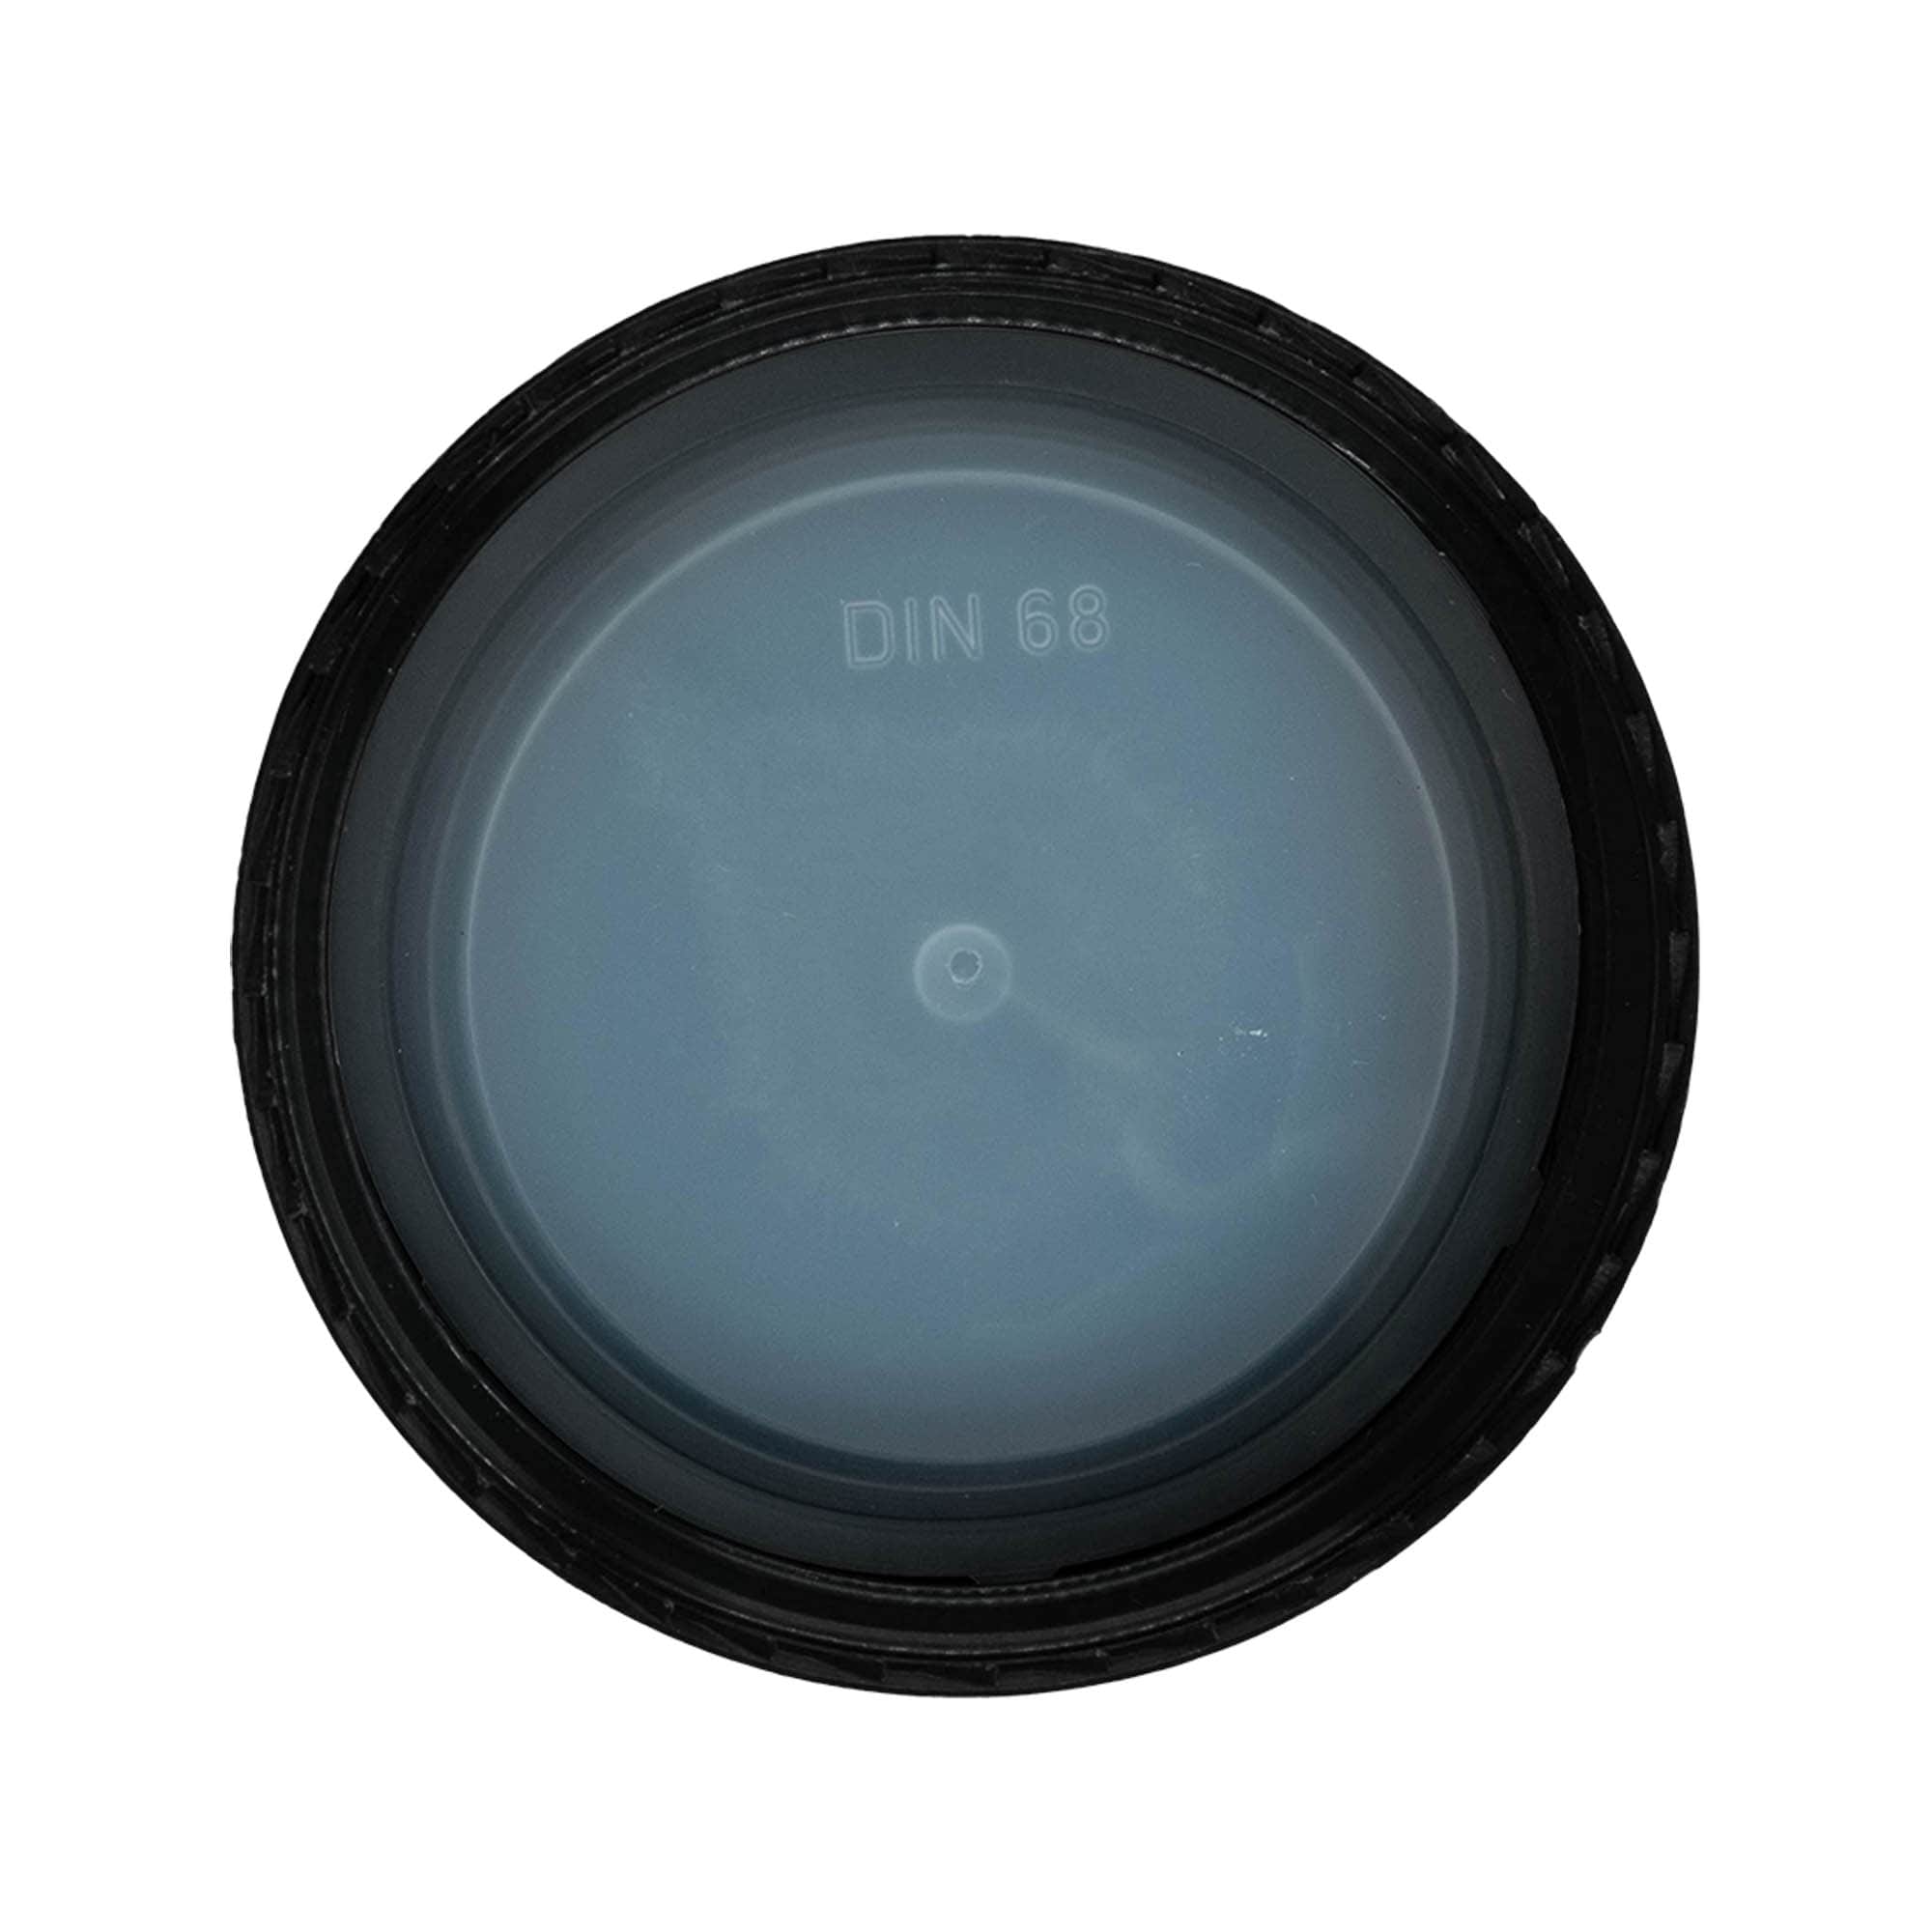 Screw cap, PP plastic, black, for opening: DIN 68